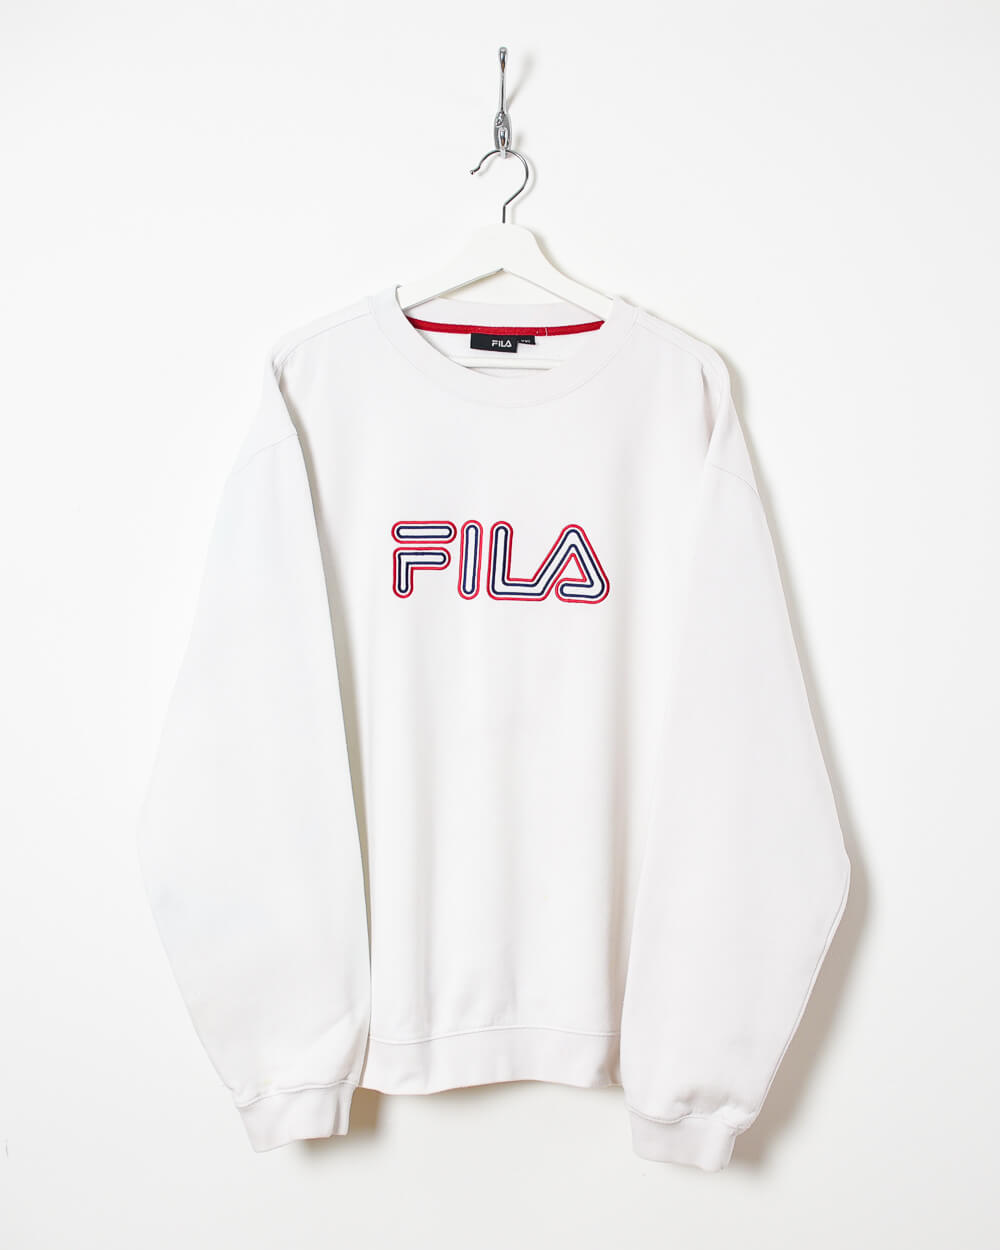 Fila Sweatshirt - X-Large - Domno Vintage 90s, 80s, 00s Retro and Vintage Clothing 